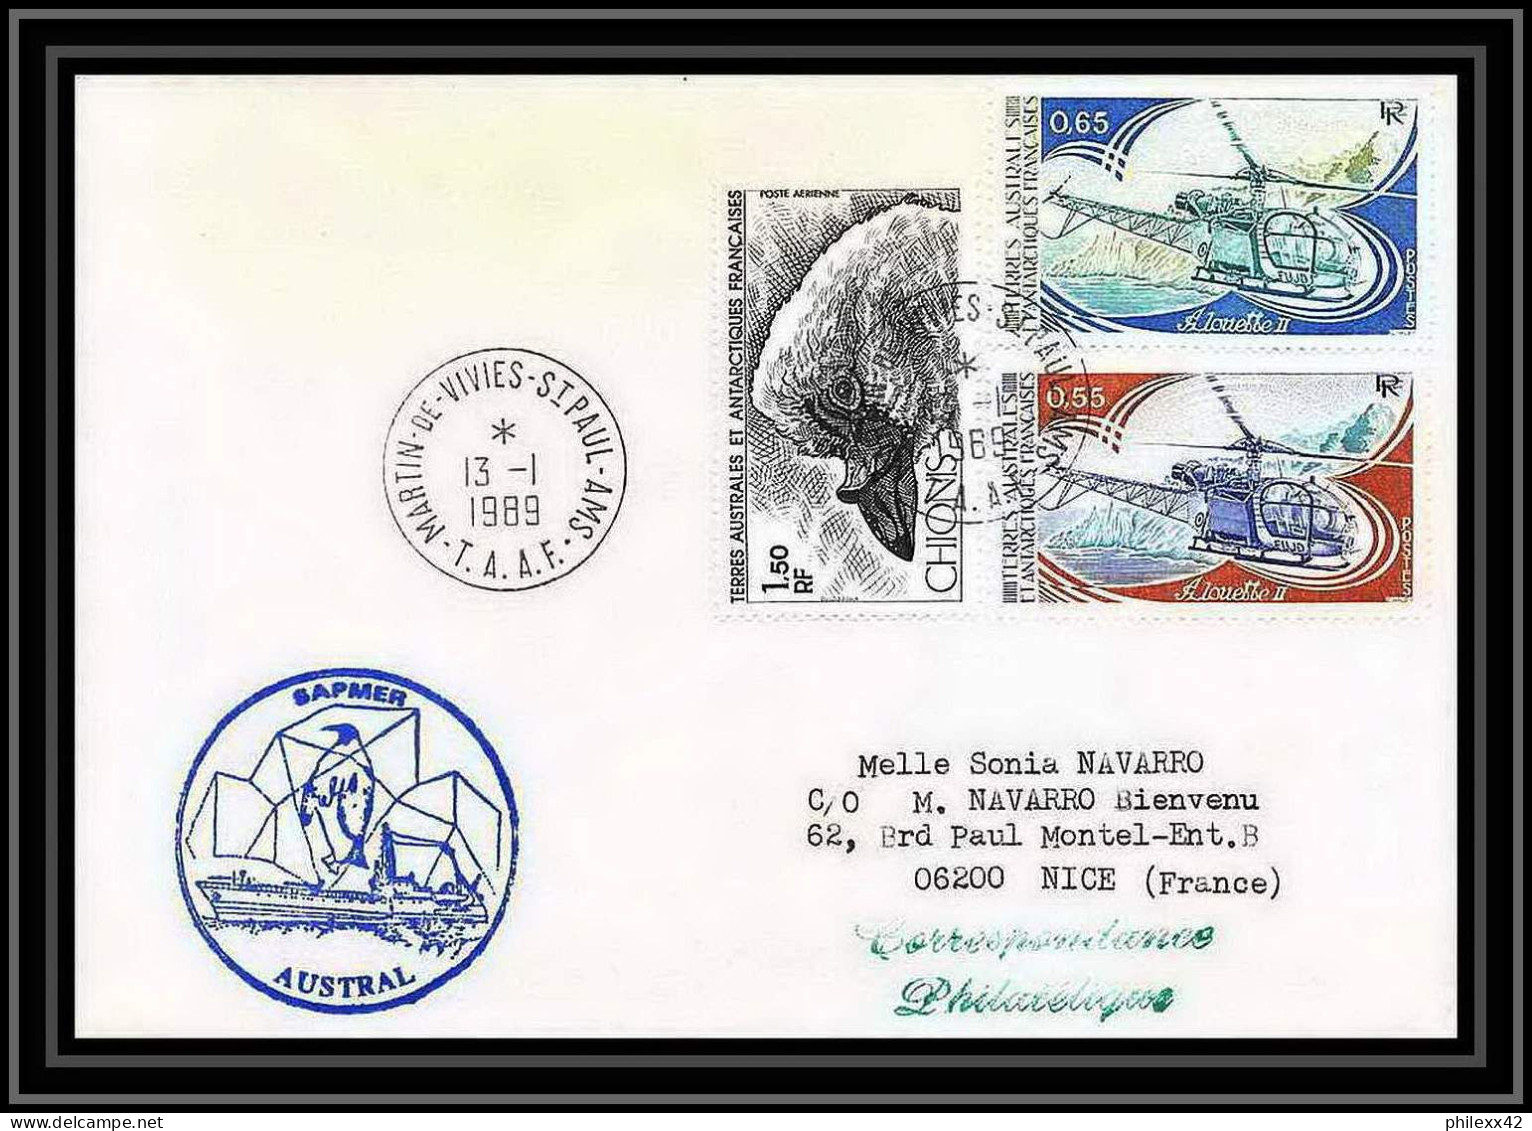 1639 Samper Austral 13/1/1989 TAAF Antarctic Terres Australes Lettre (cover) - Briefe U. Dokumente